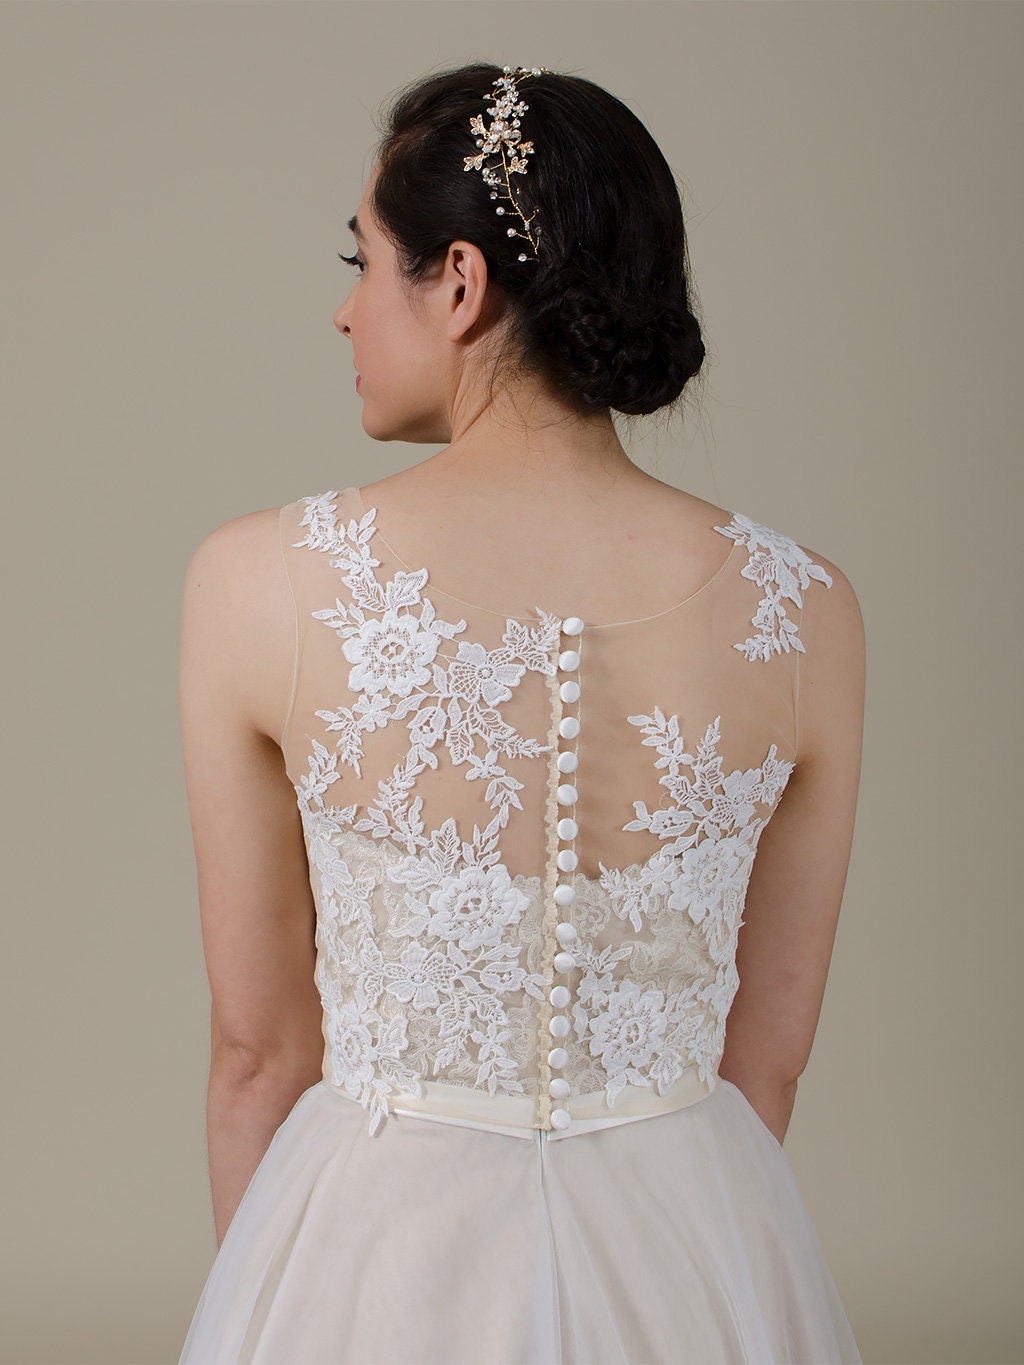 Bridal bolero sleeveless lace bolero wedding bolero wedding jacket lace shrug bridal jacket bridal lace top - made to order